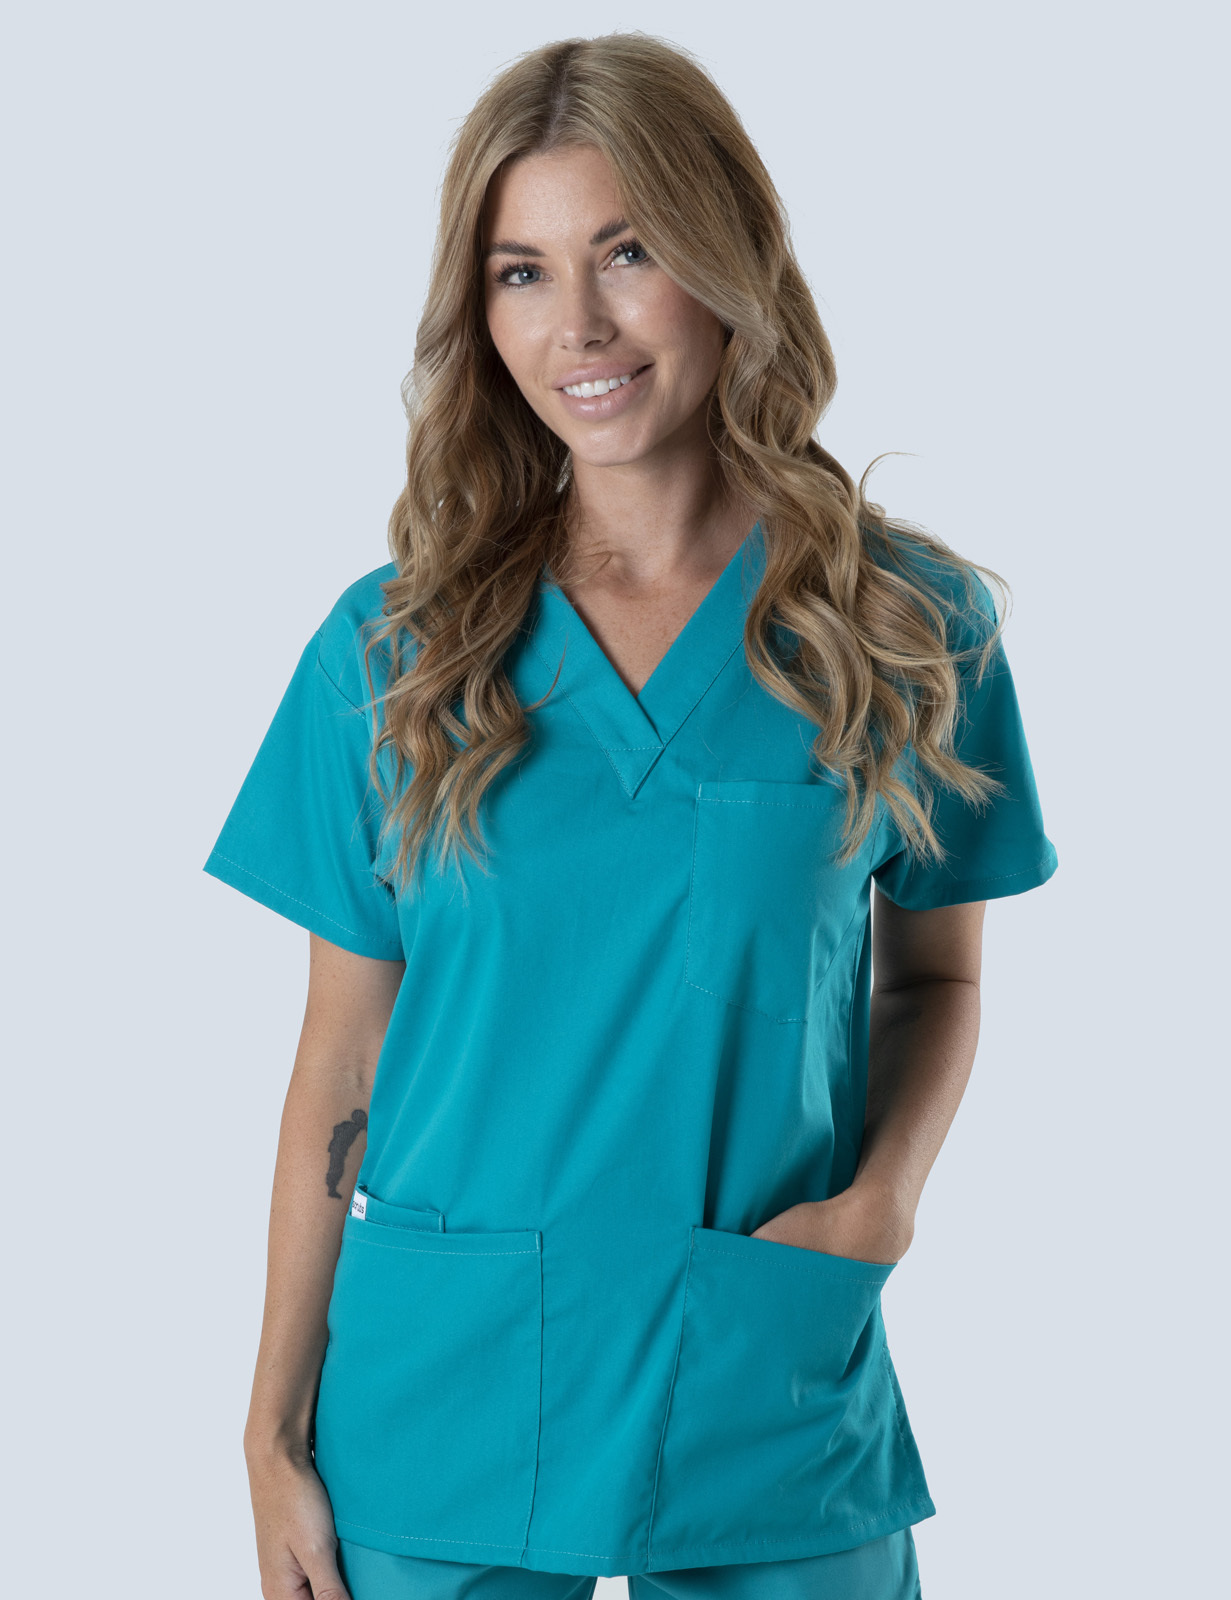 Queensland Children's Hospital Emergency Department Assistant in Nursing  Uniform Top Bundle  (4 Pocket Top in Teal incl Logos)